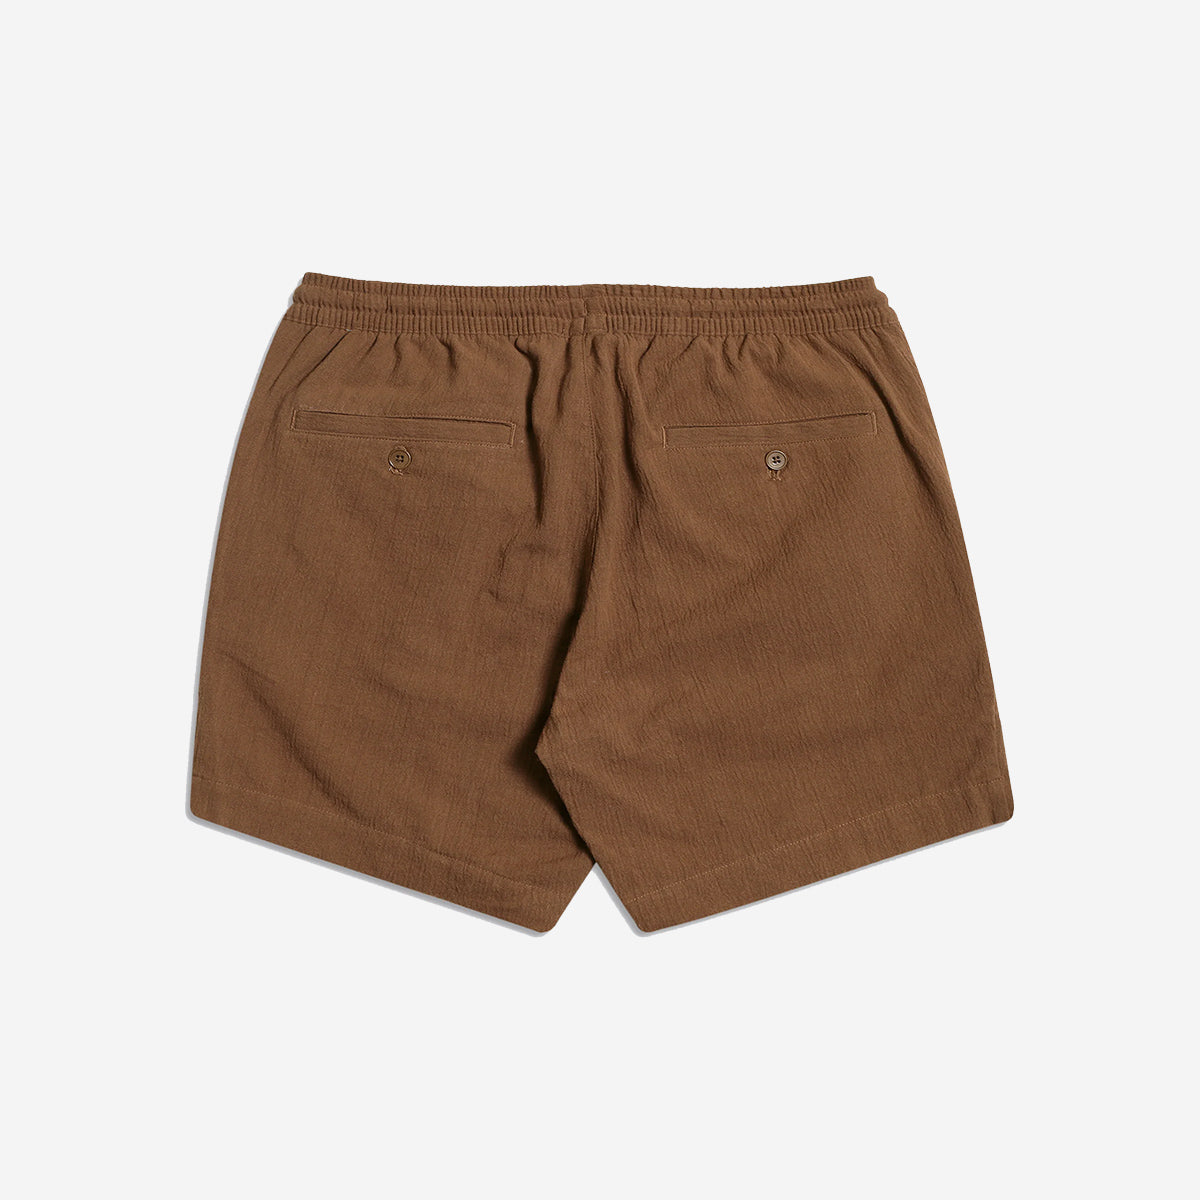 House Seersucker Easy Shorts - Desert Palm Brown